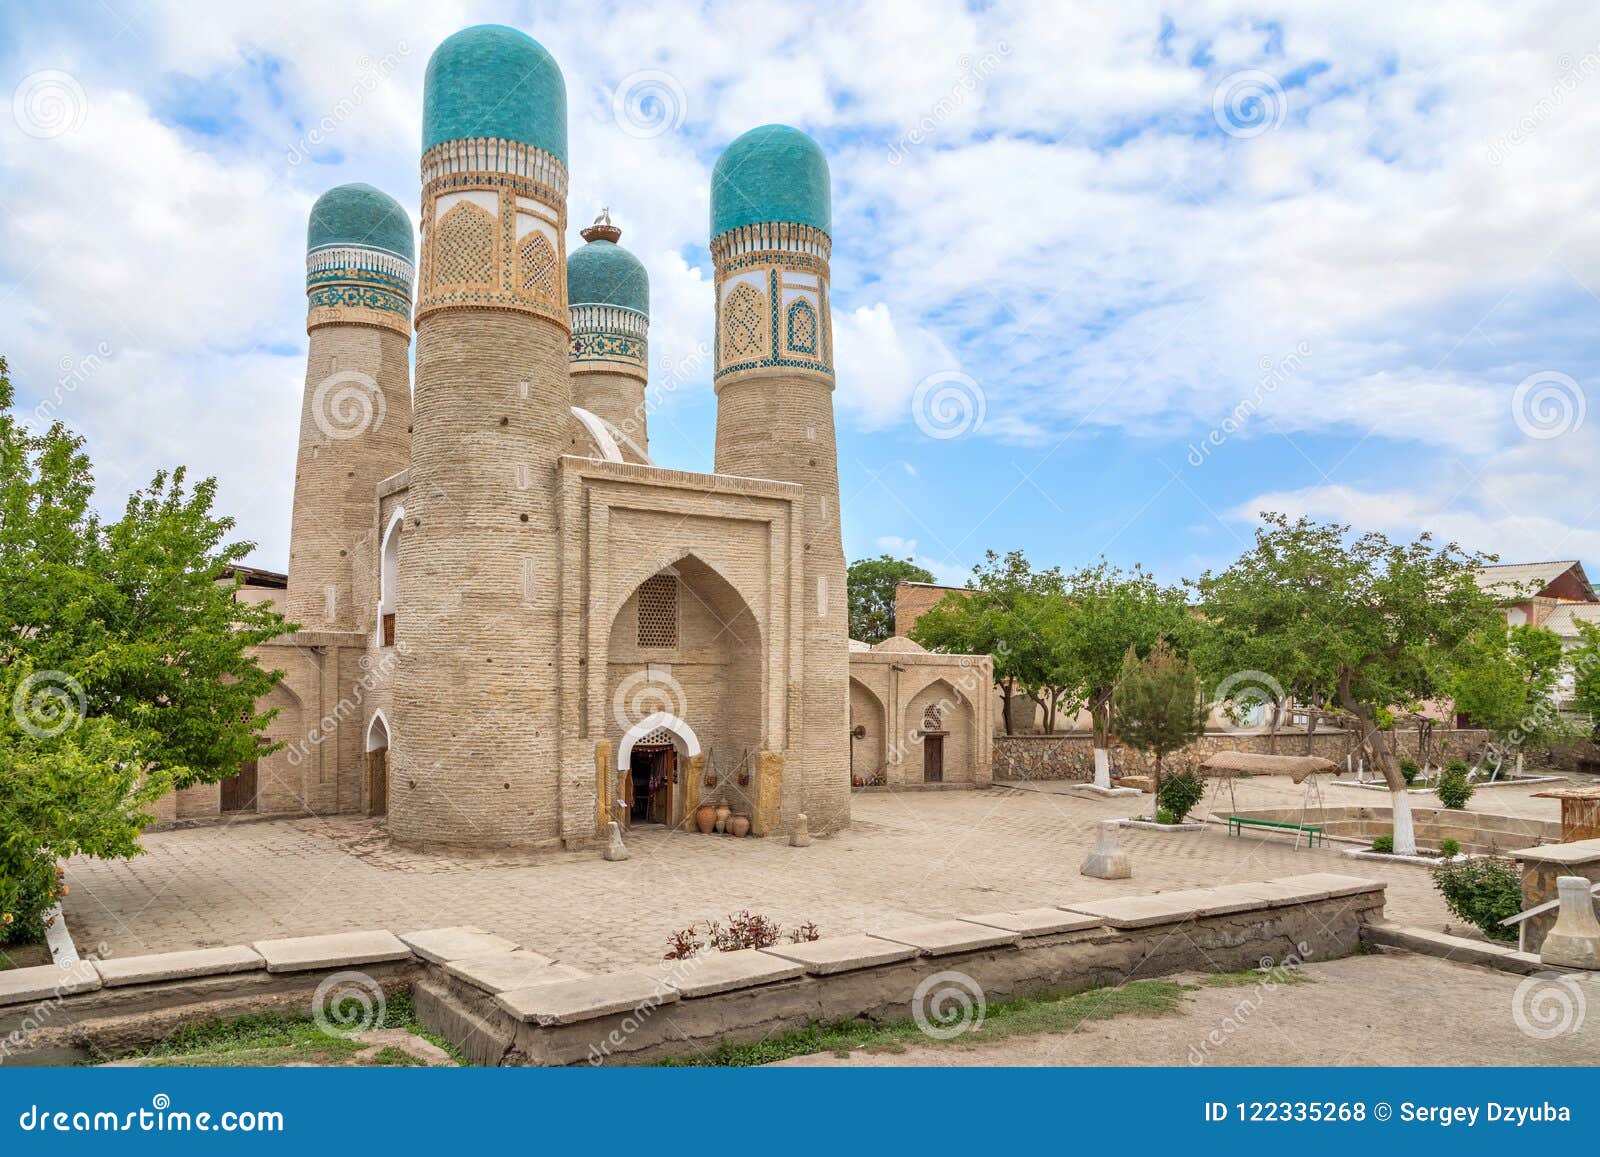 chor minor mosque in bukhara, uzbekistan